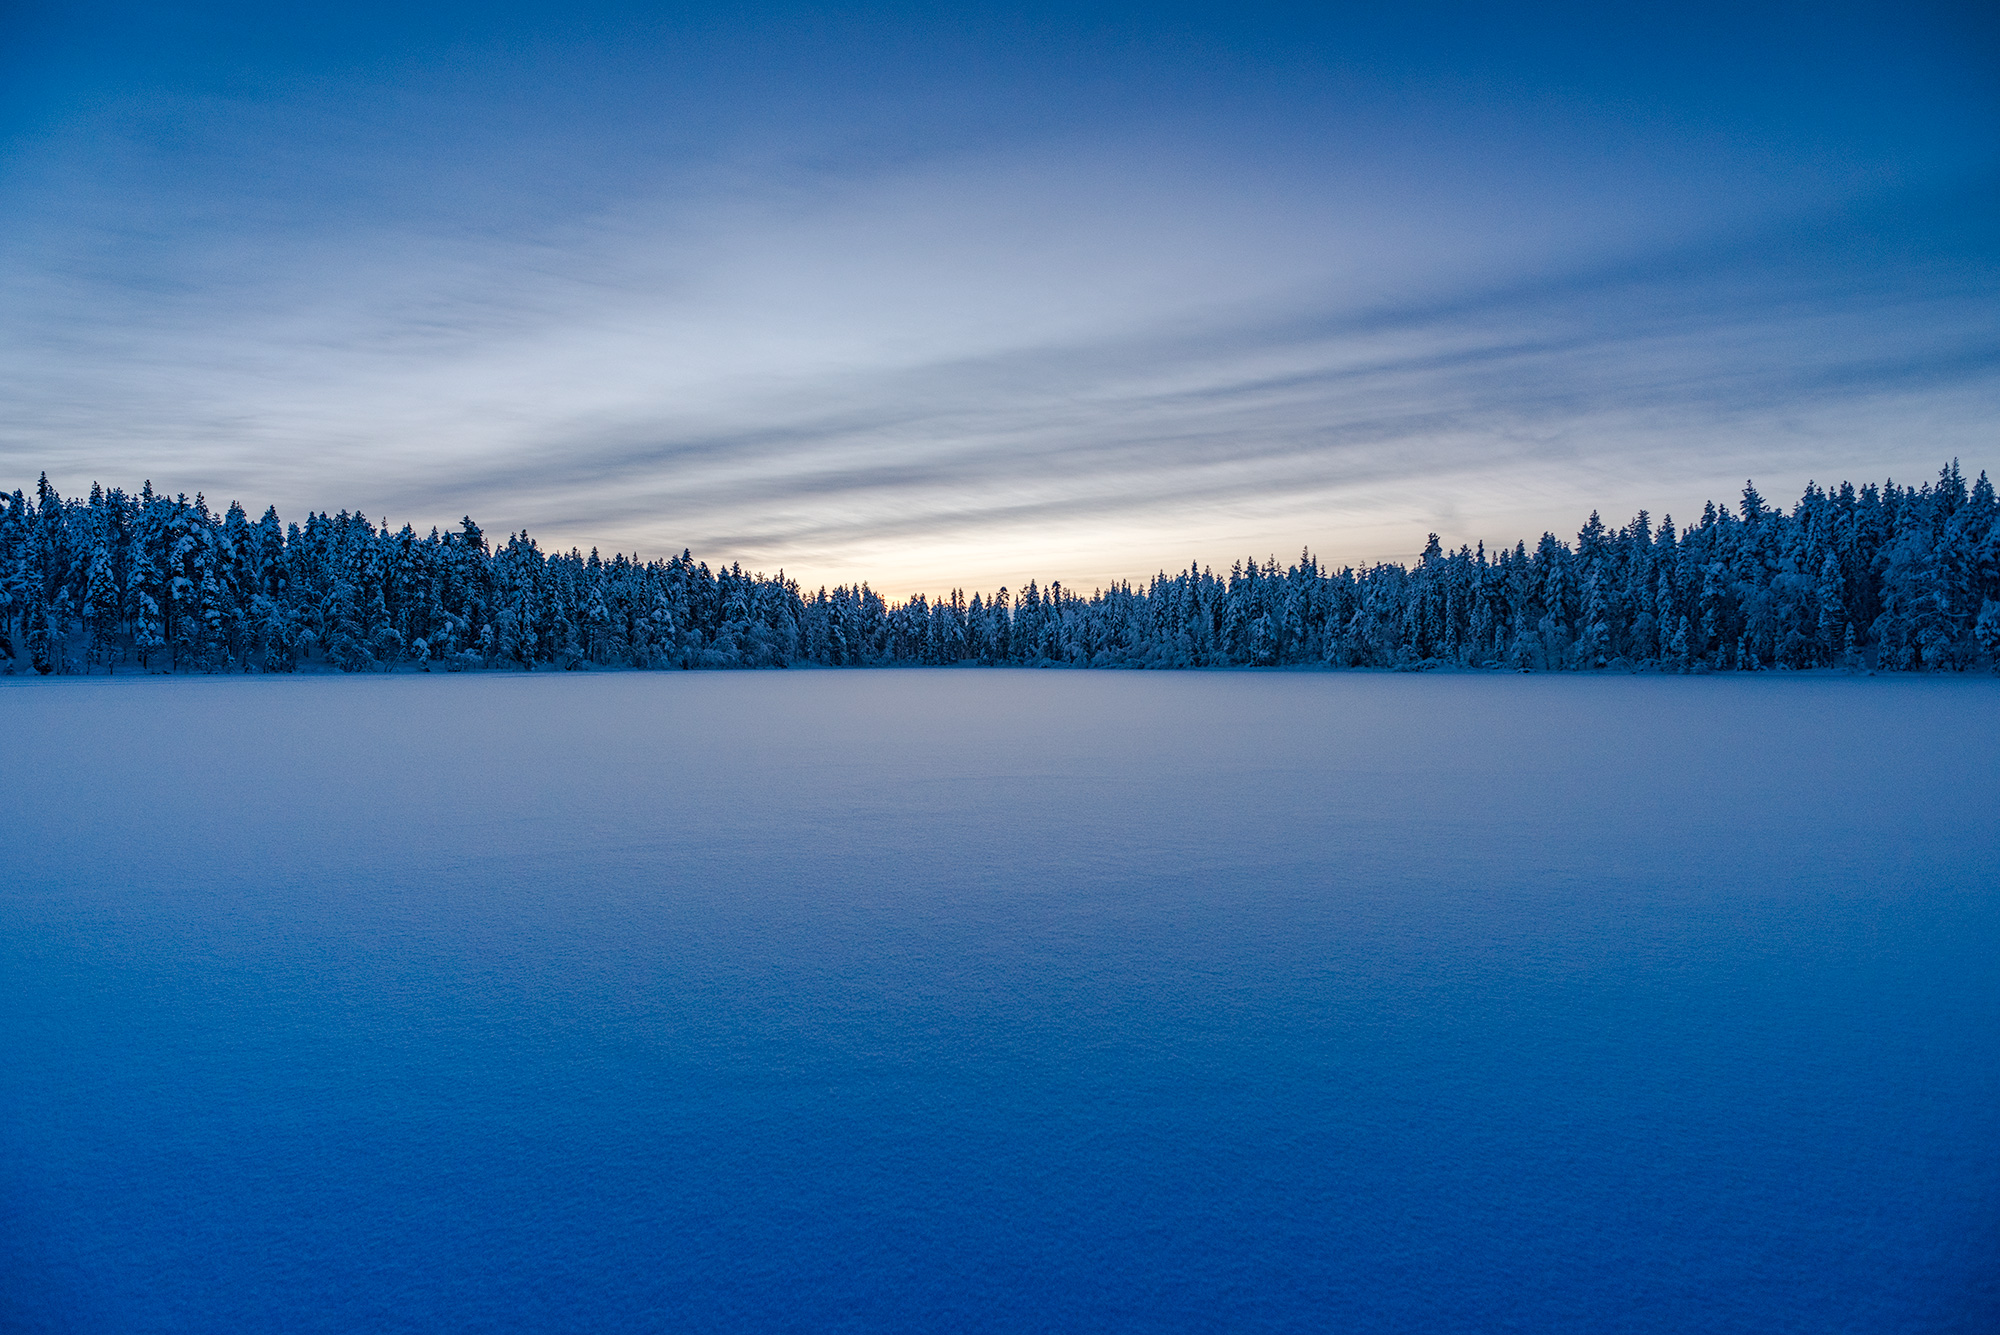 Lapland forest in winter at sunset, taken by landscape photographer Jennifer Esseiva.